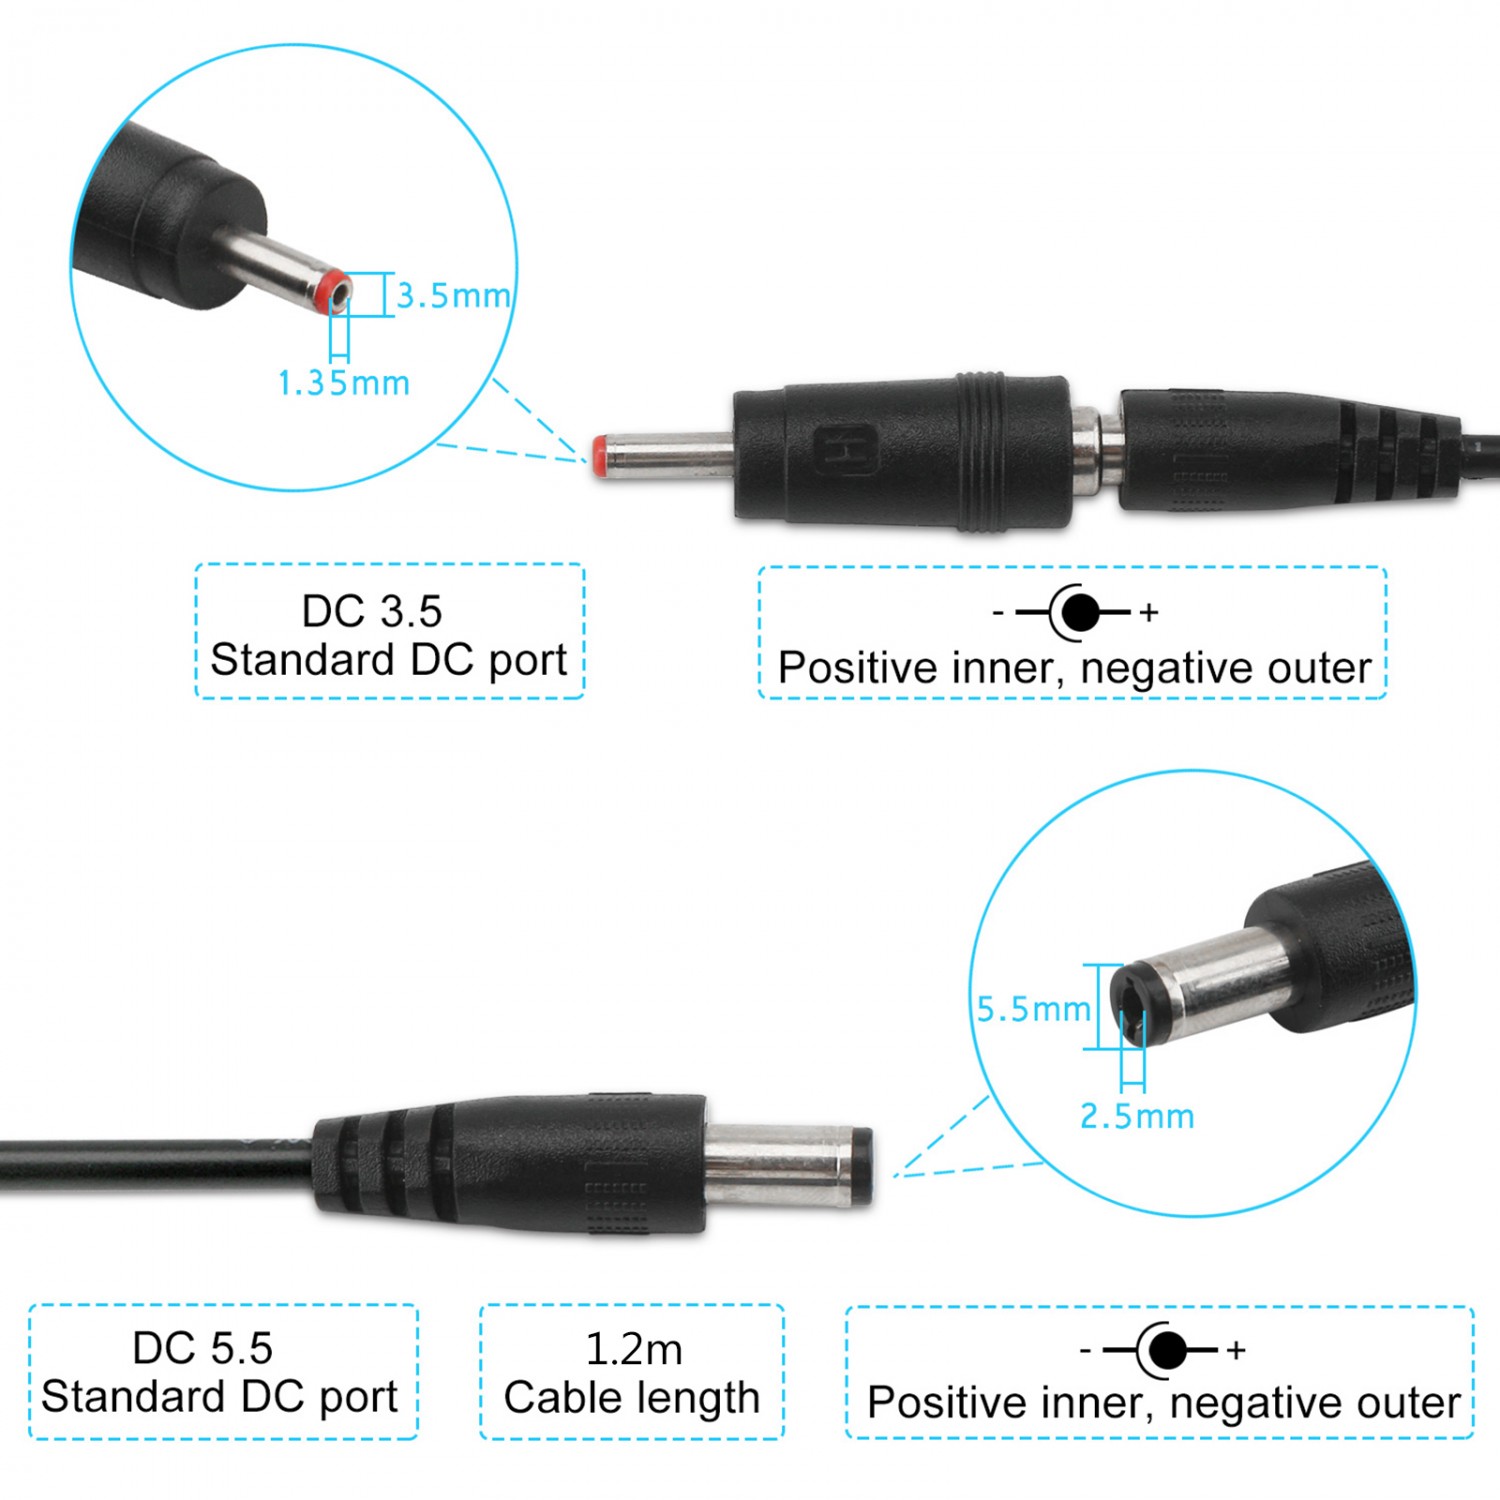 USB to 12v, DROK 5v to 12v USB Boost Converter, USB Cable DC 5v